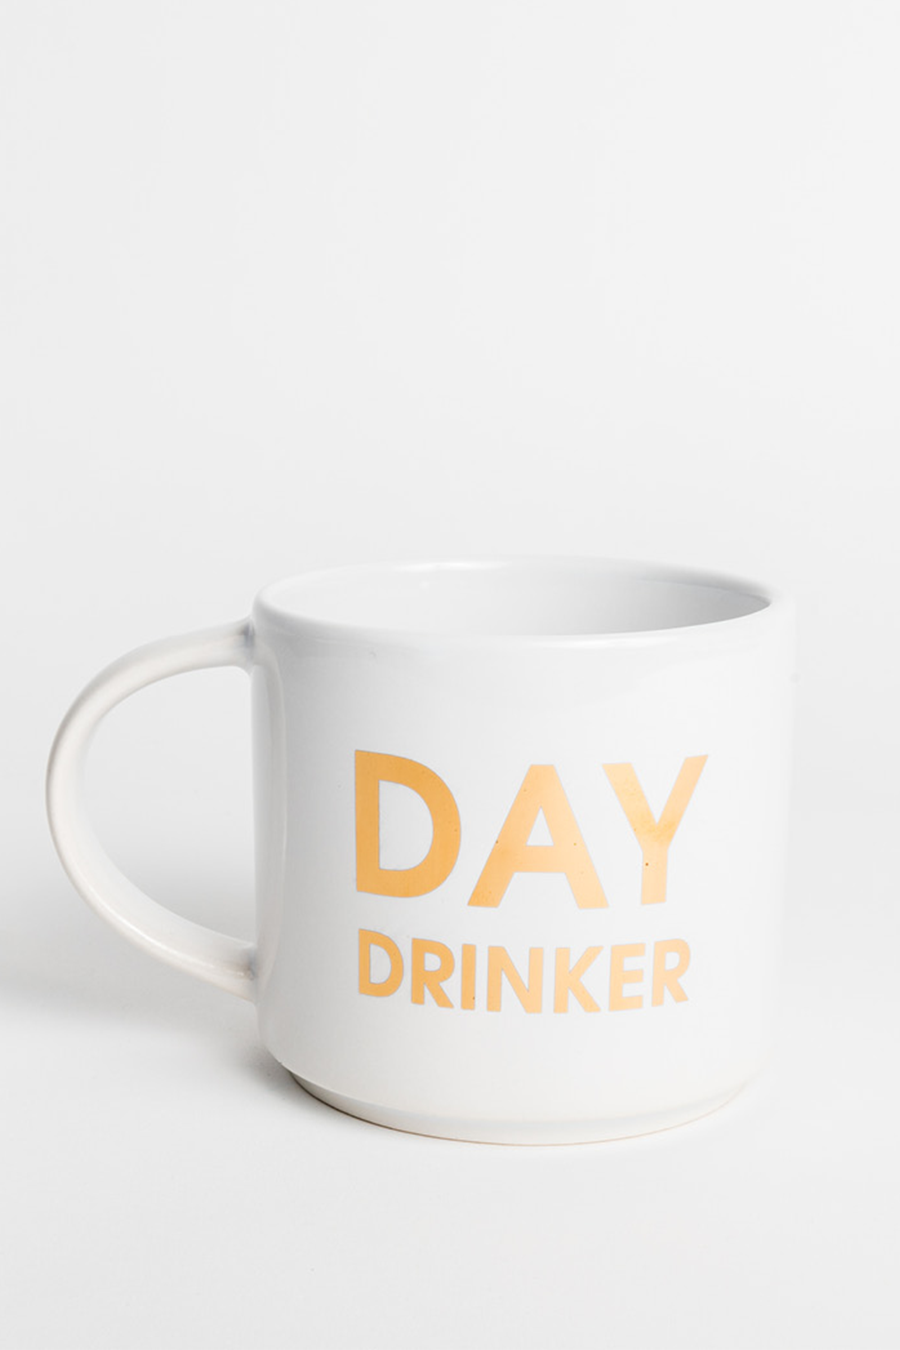 Day Drinker Mug | White Gold - Main Image Number 1 of 1